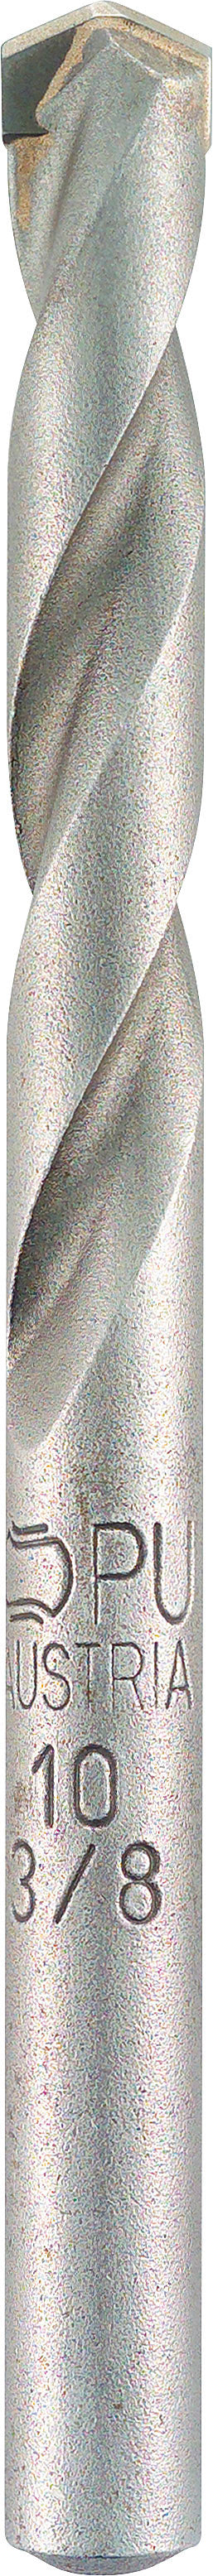 alpen-masonry-drill-bit-long-life-6.0-x-150mm-alp71806-1